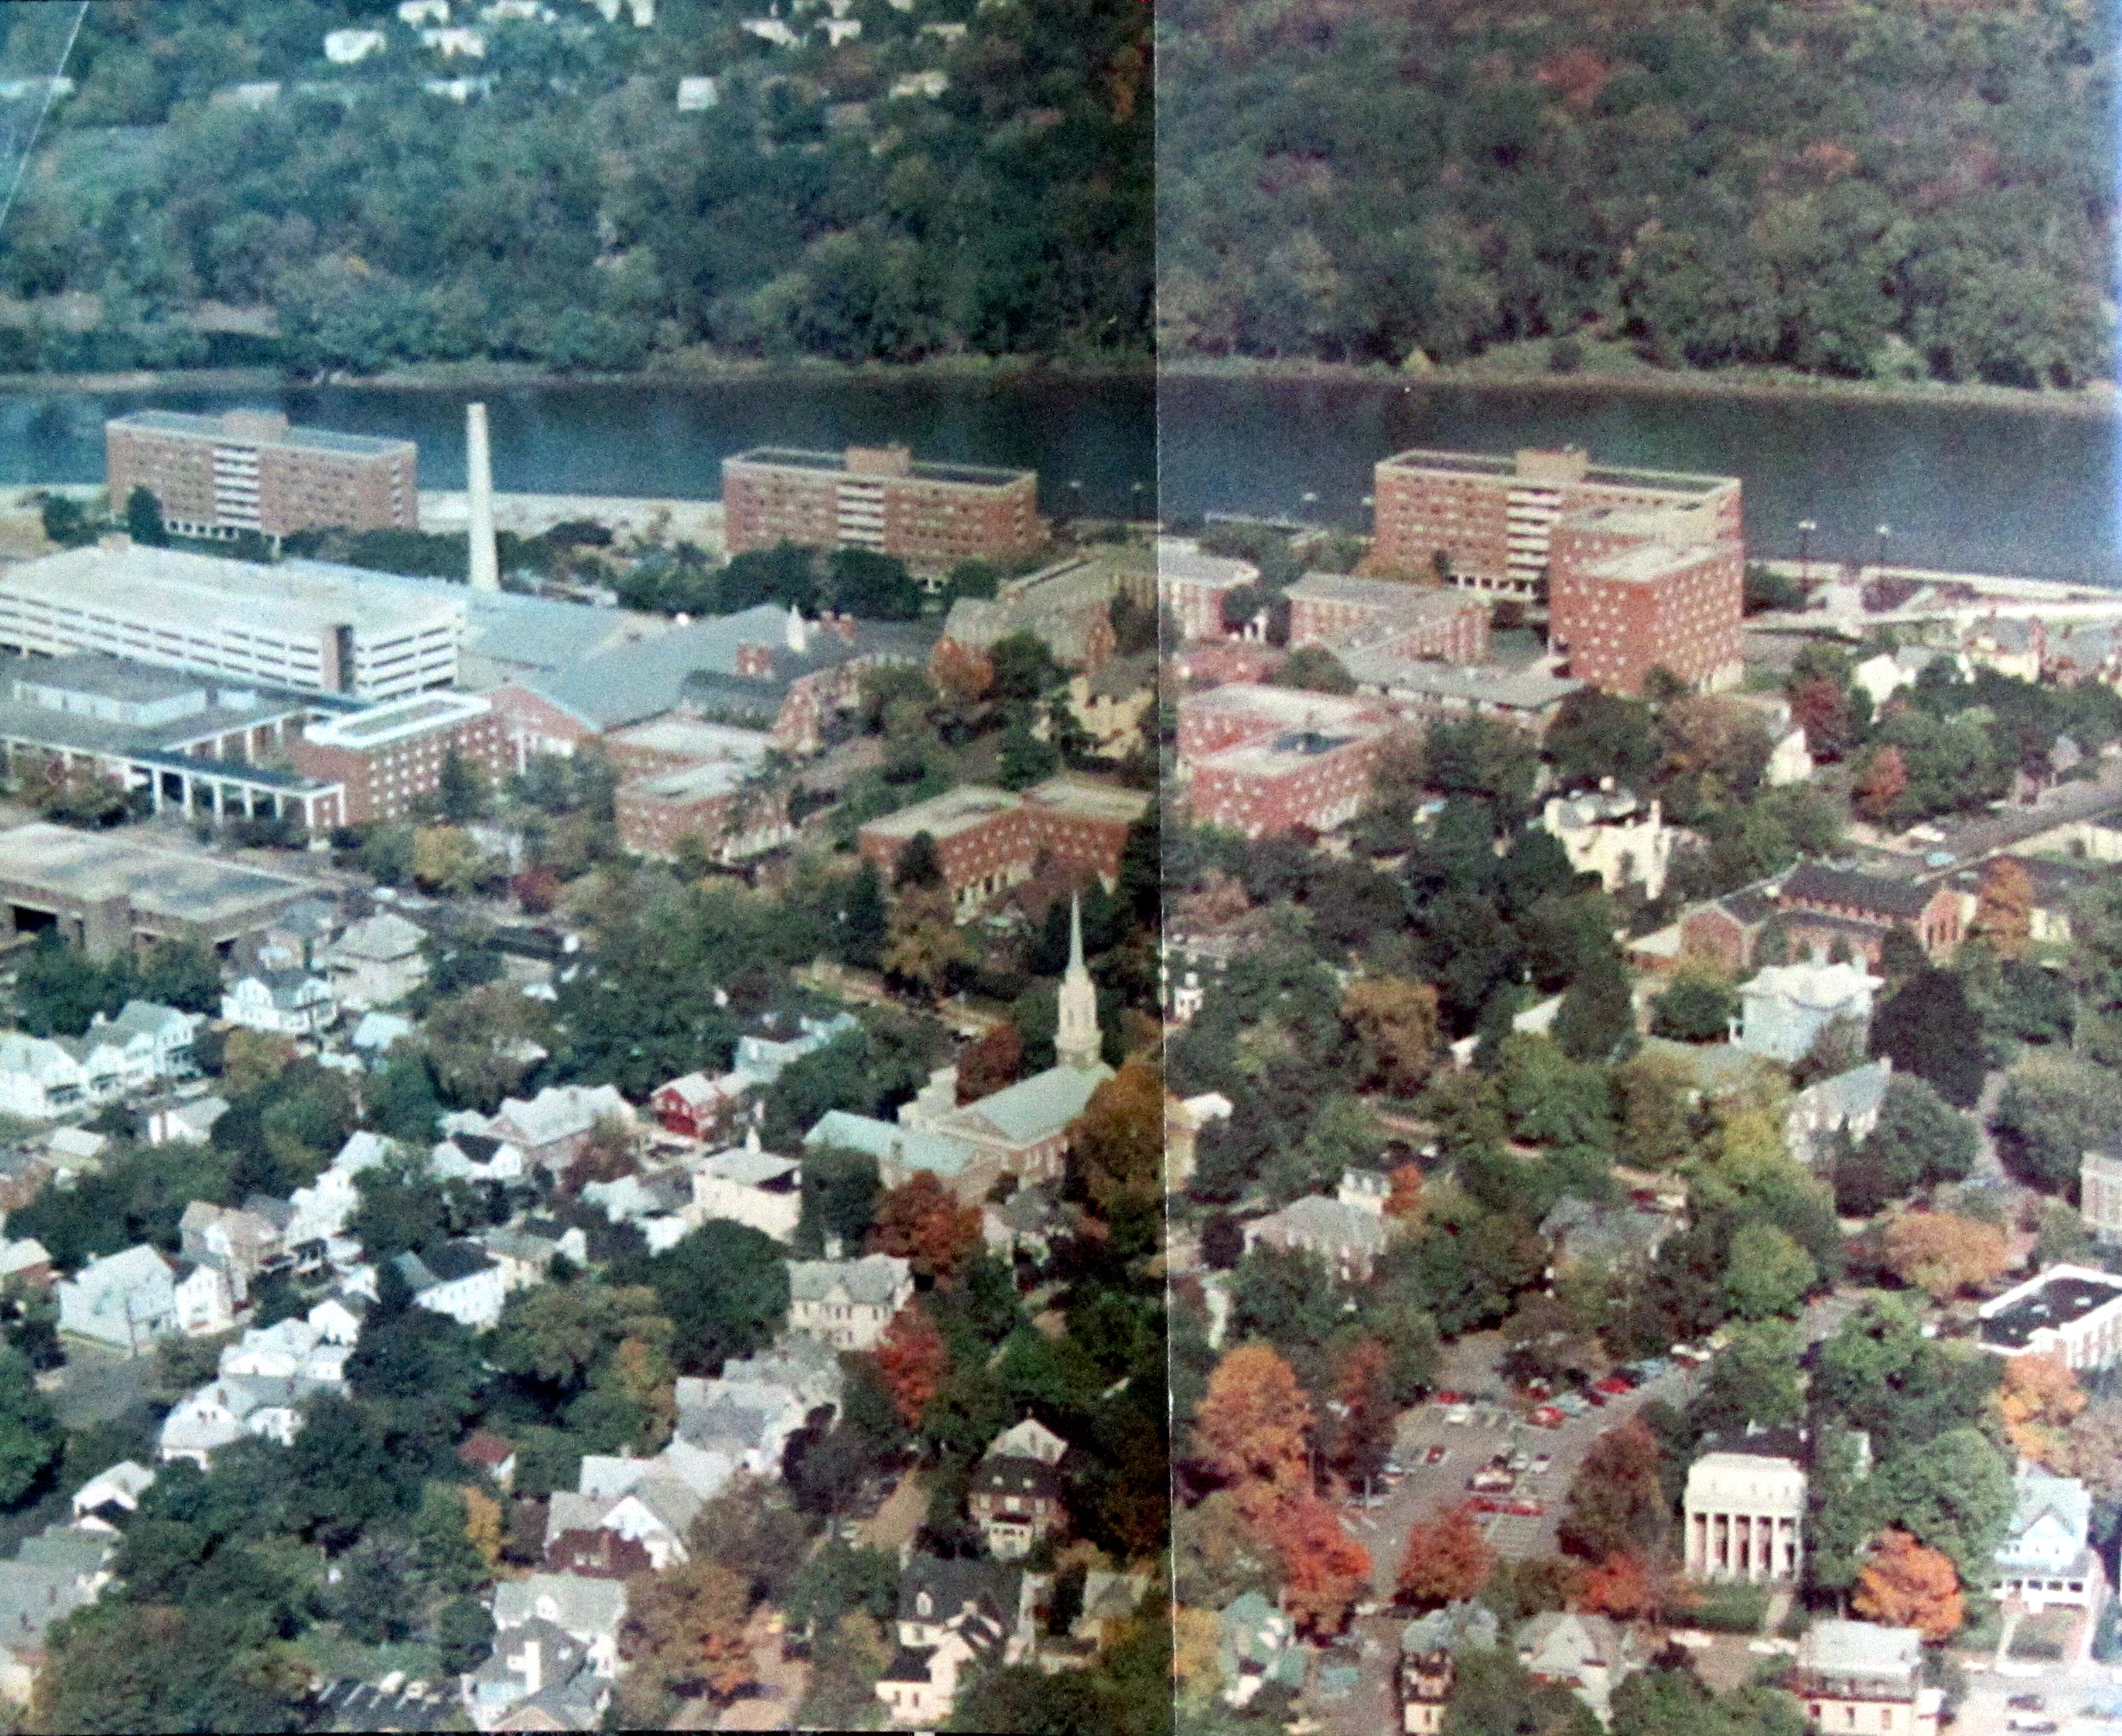 College Avenue Campus 1984 - Student Center on Left